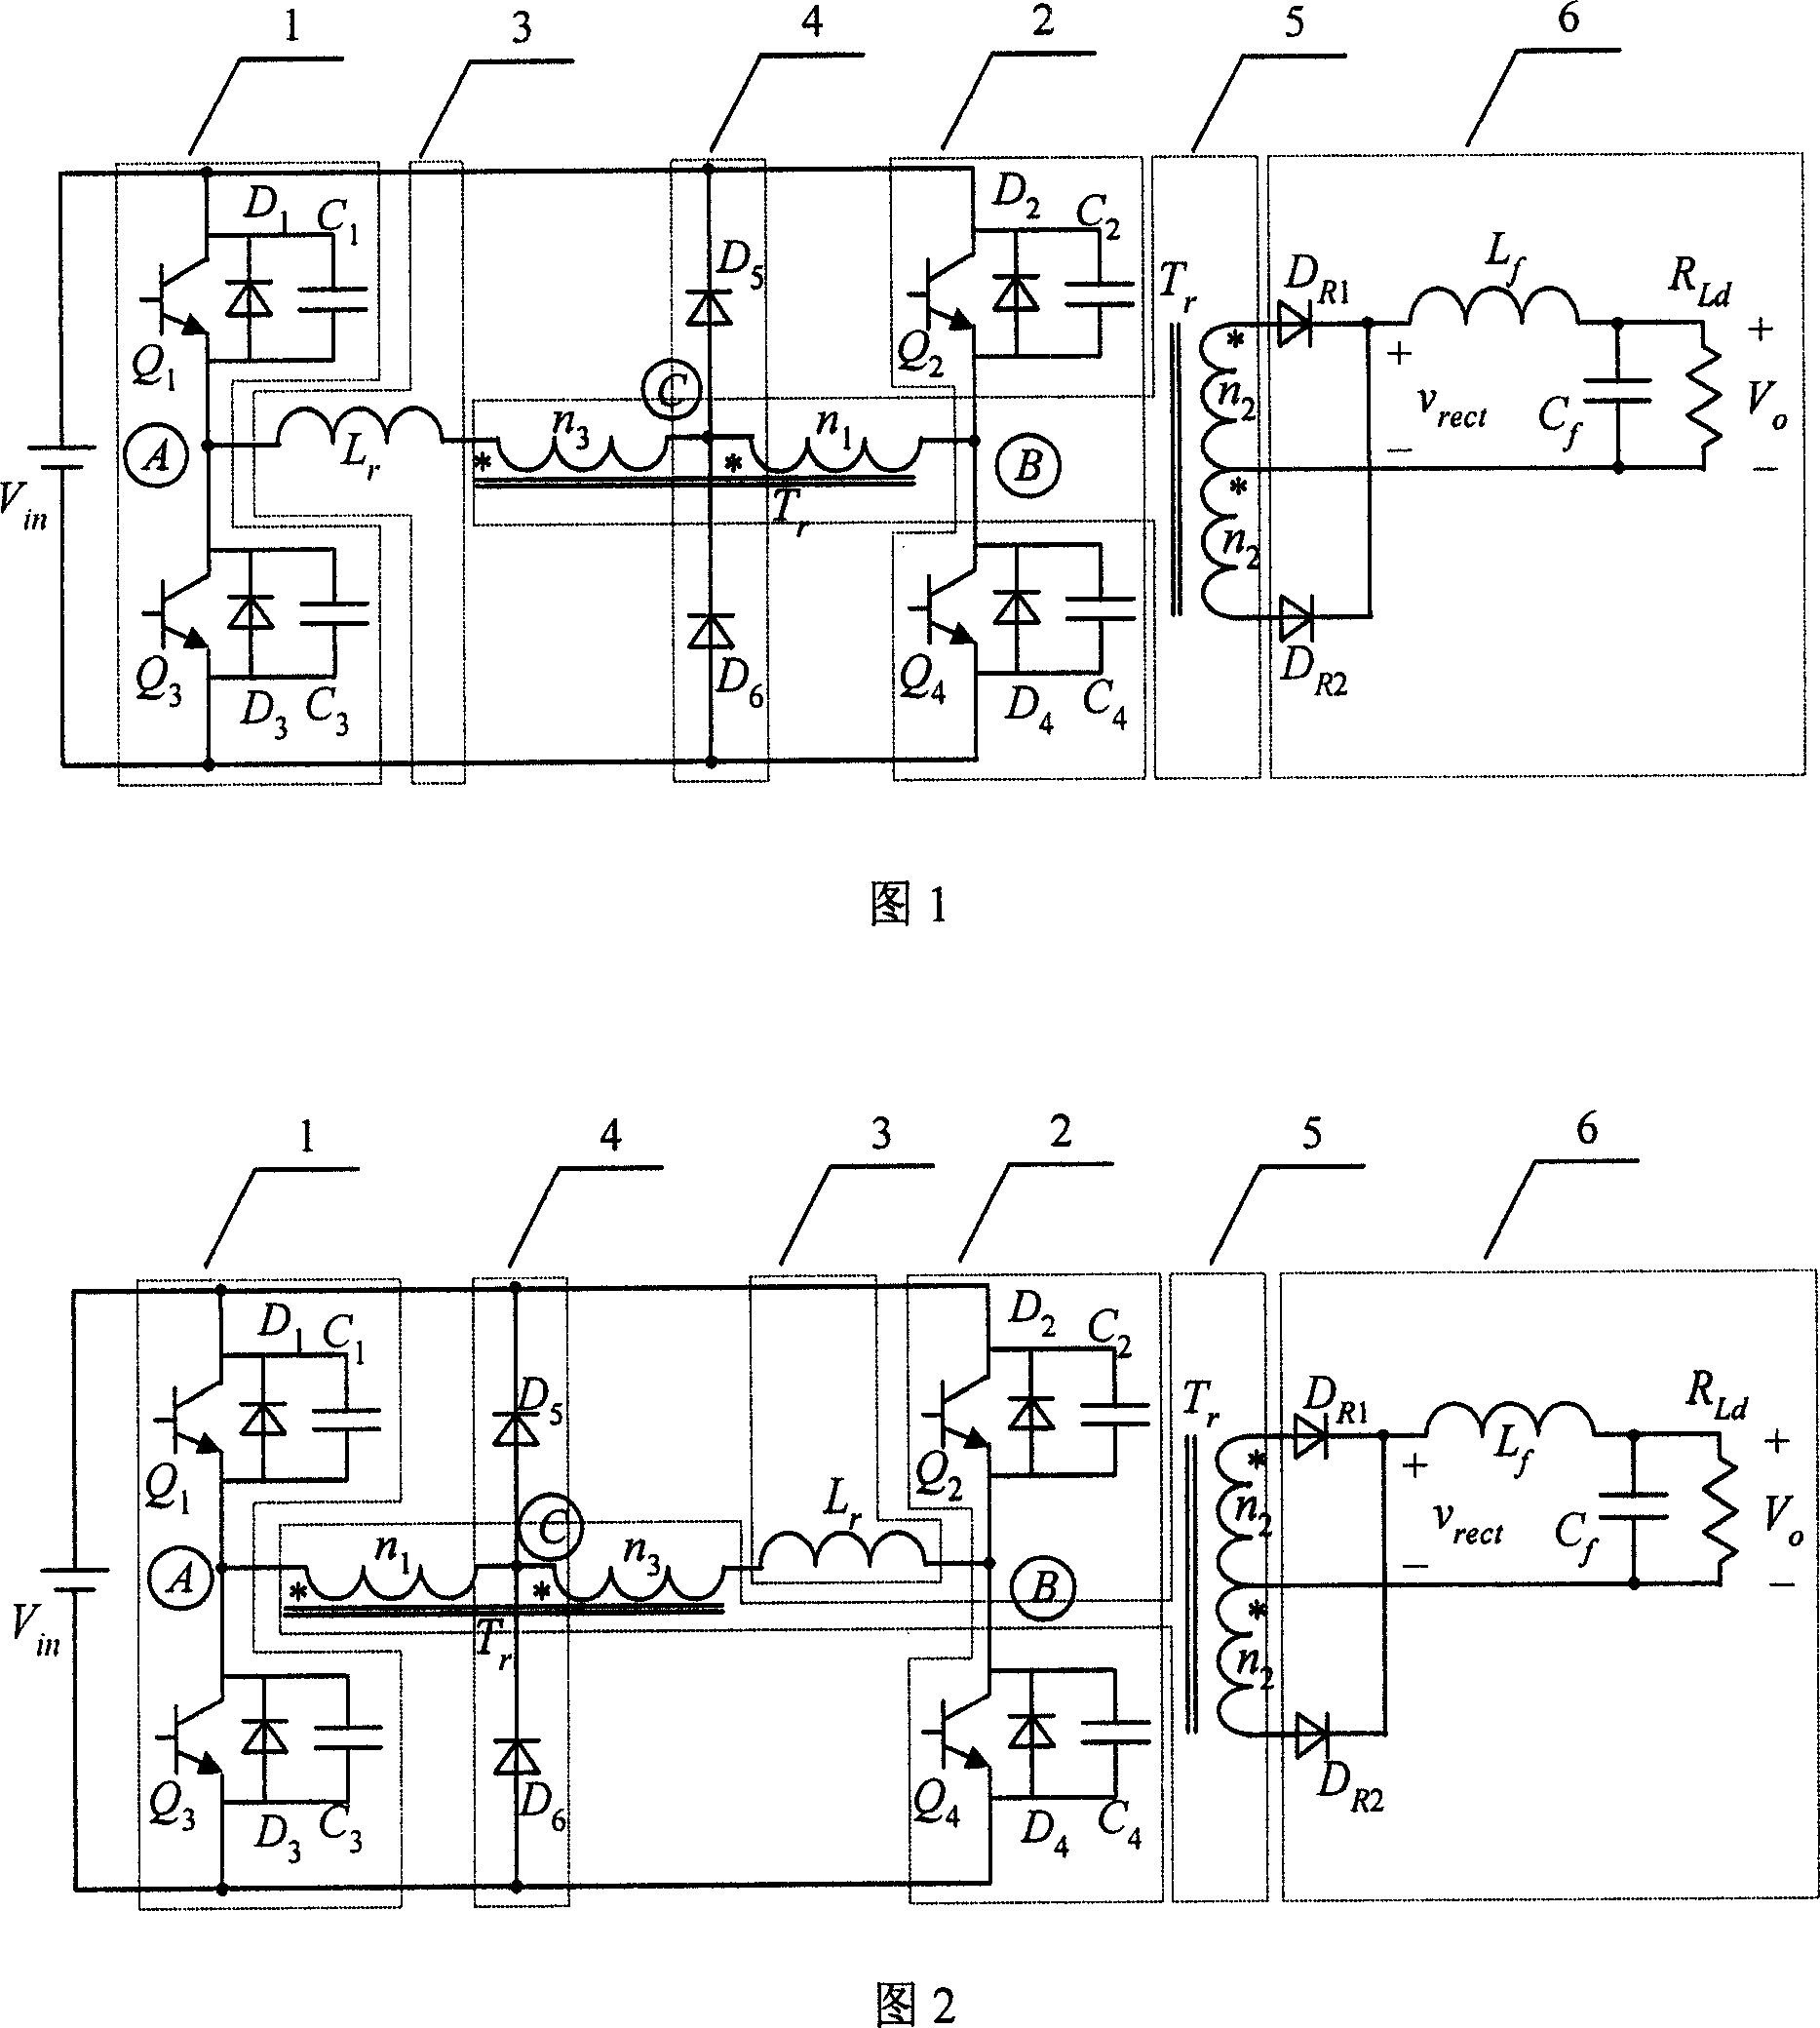 Zero-voltage switch full-bridge direct current converter